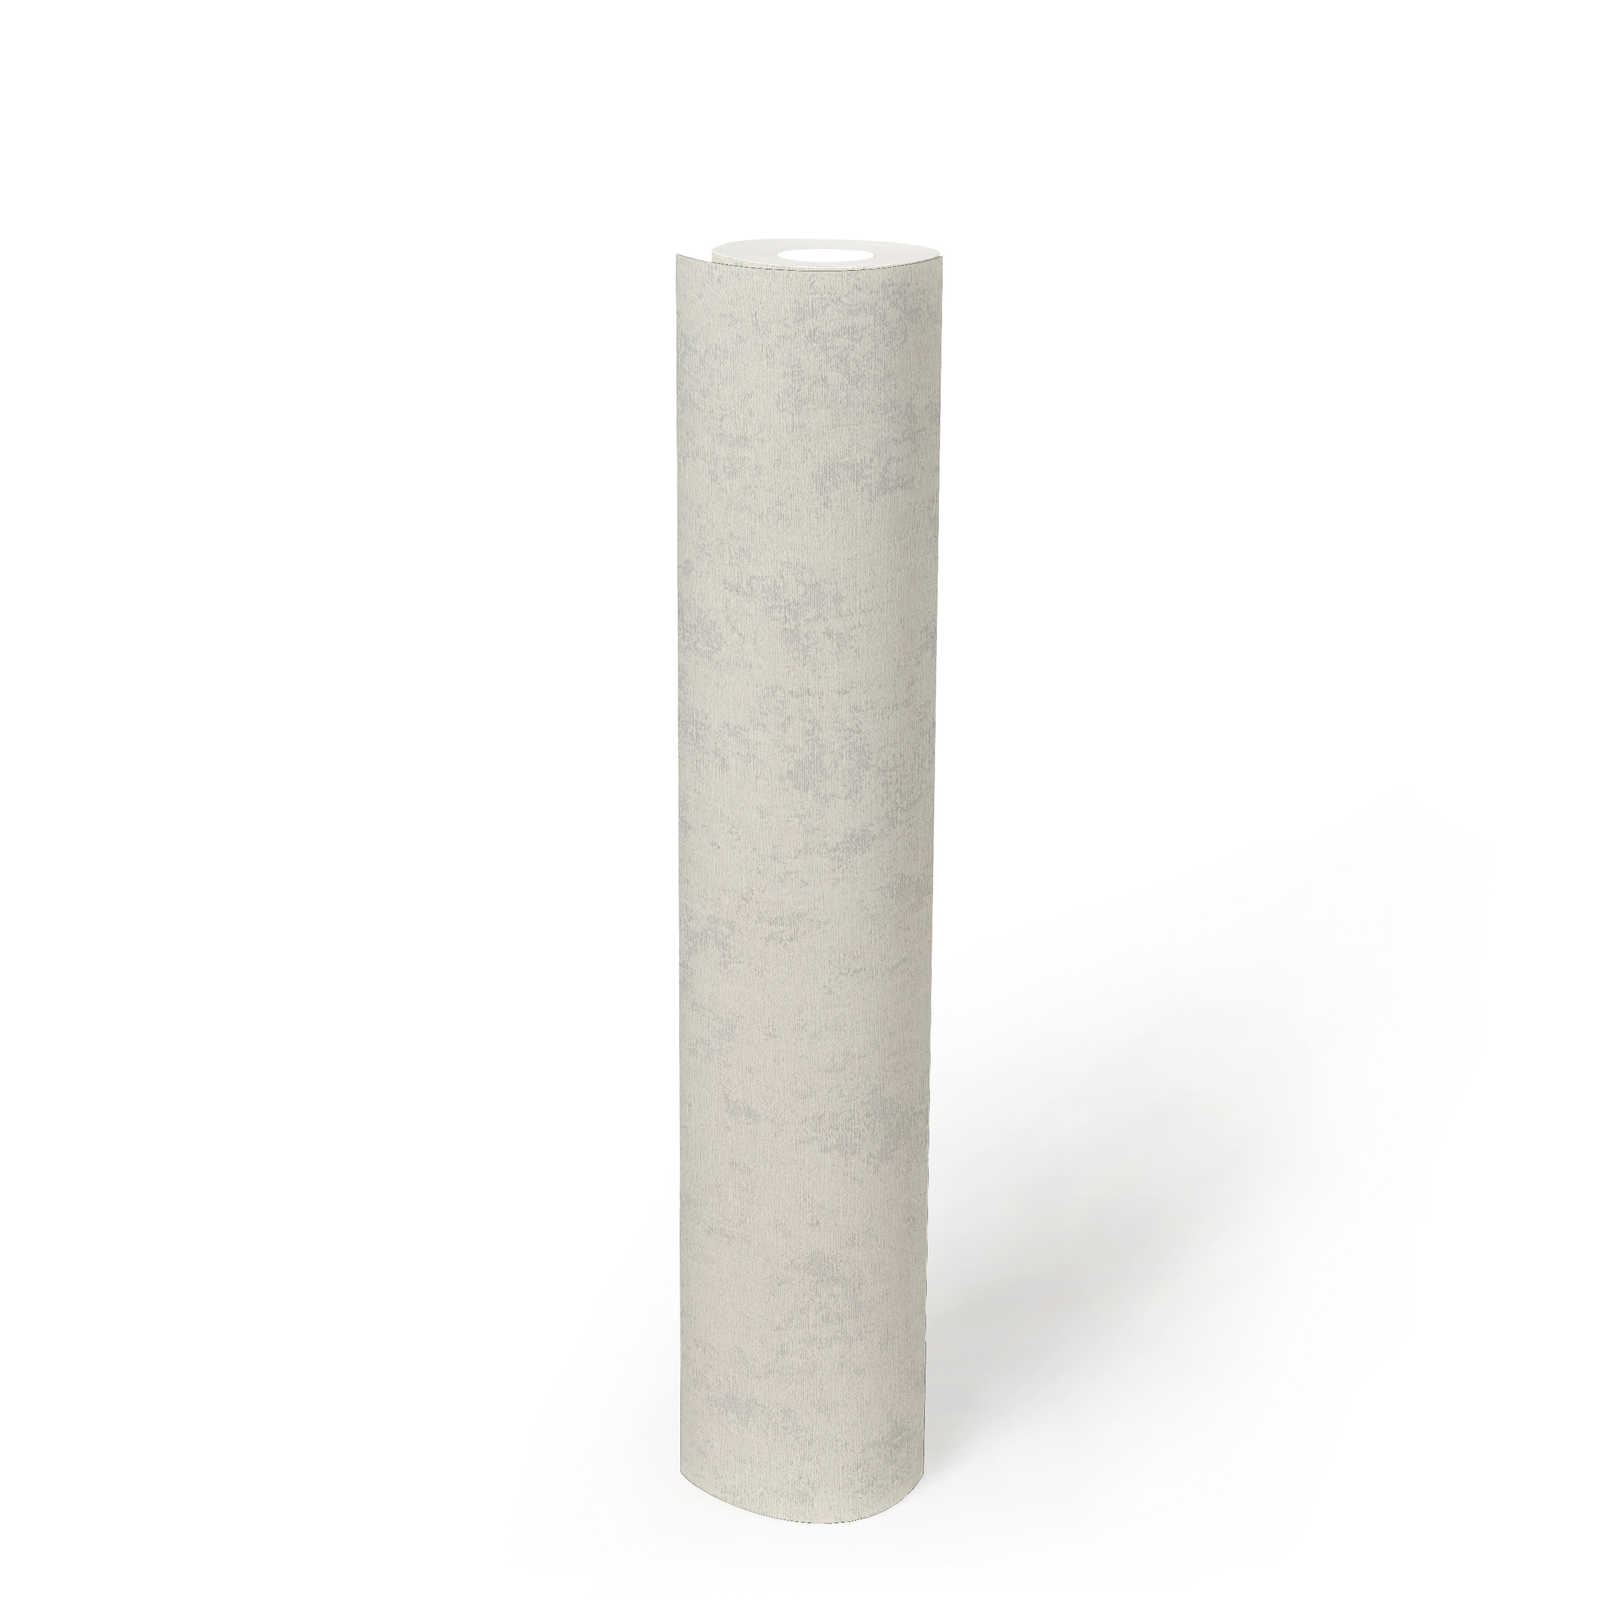             Papel pintado de estilo escandinavo con diseño de textura lisa - gris, blanco
        